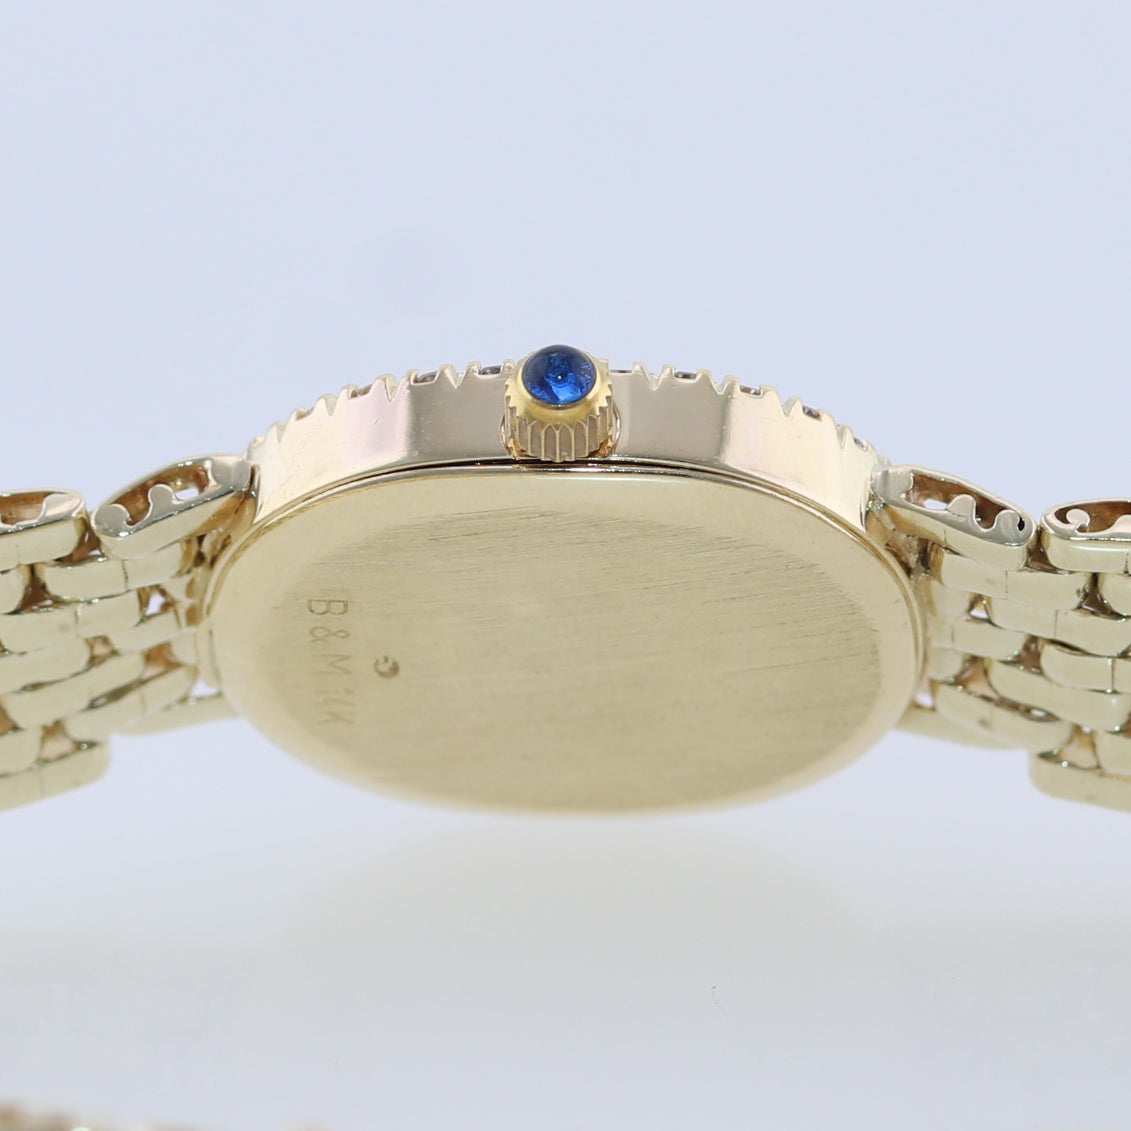 Ladies Baume & Mercier Classic Solid 14k Yellow Gold Diamond 18mm Quartz Watch